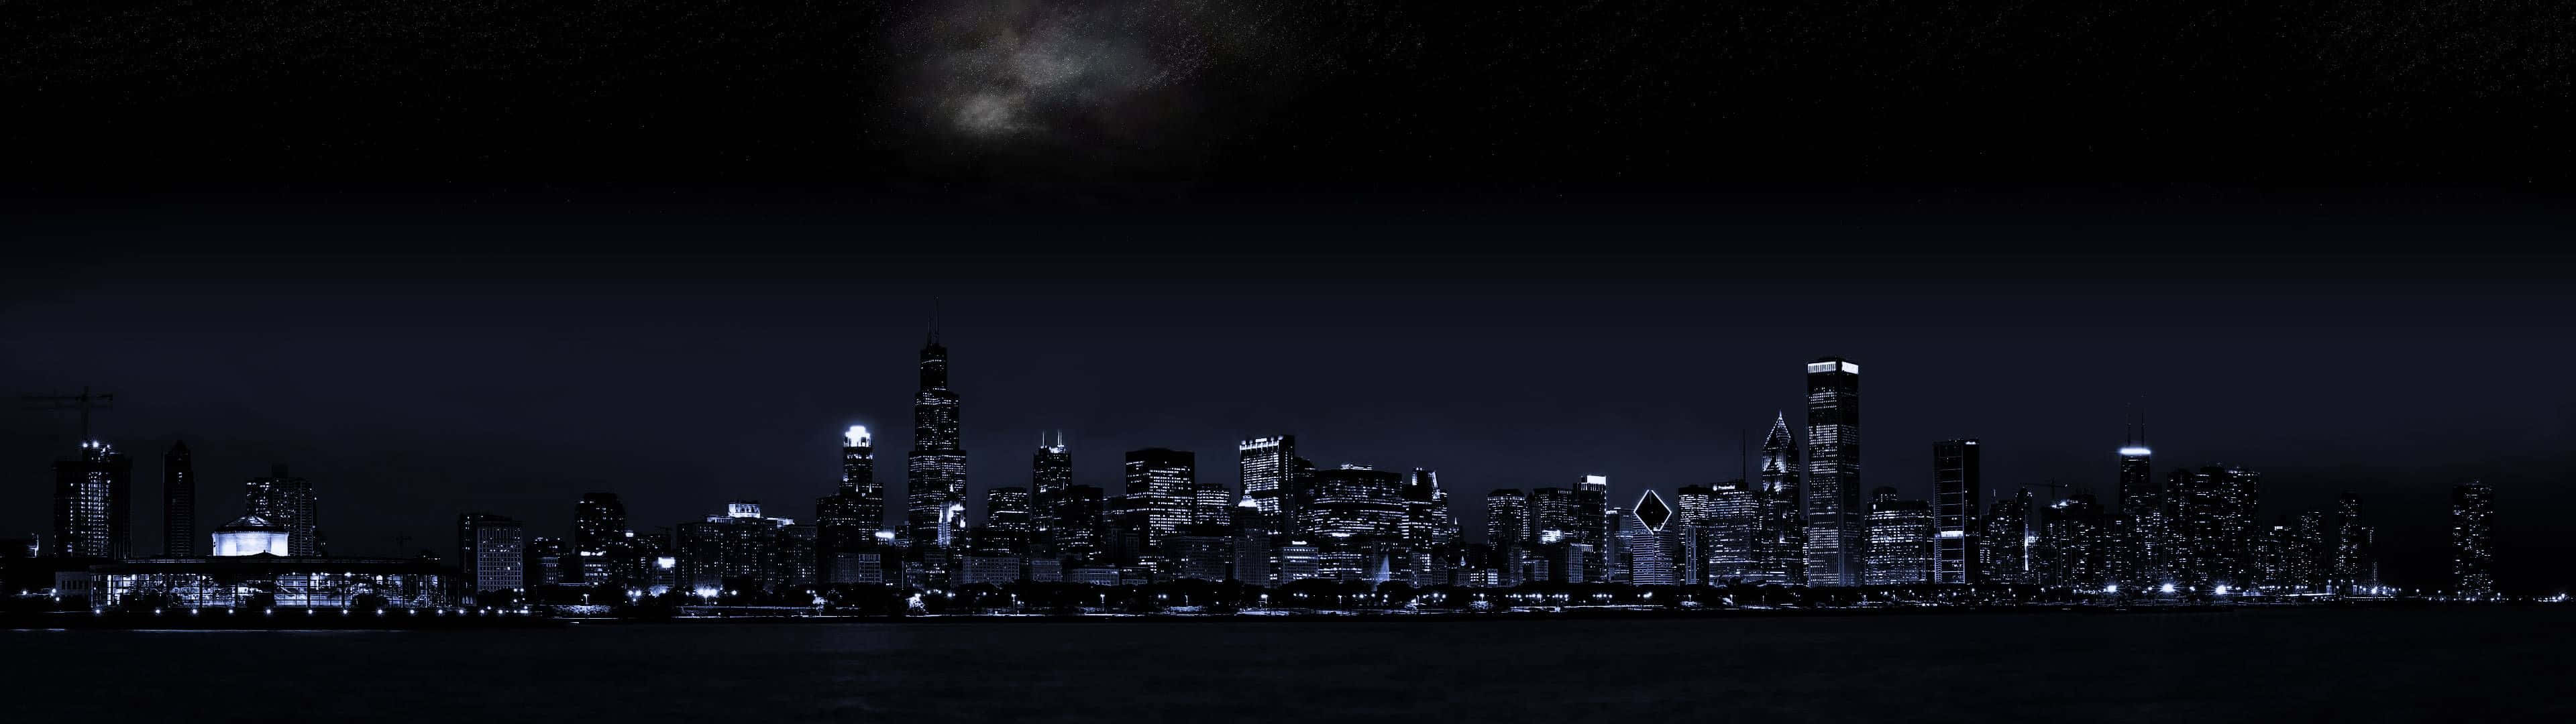 Dark Urban City Skyline Cool Dual Monitor Wallpaper